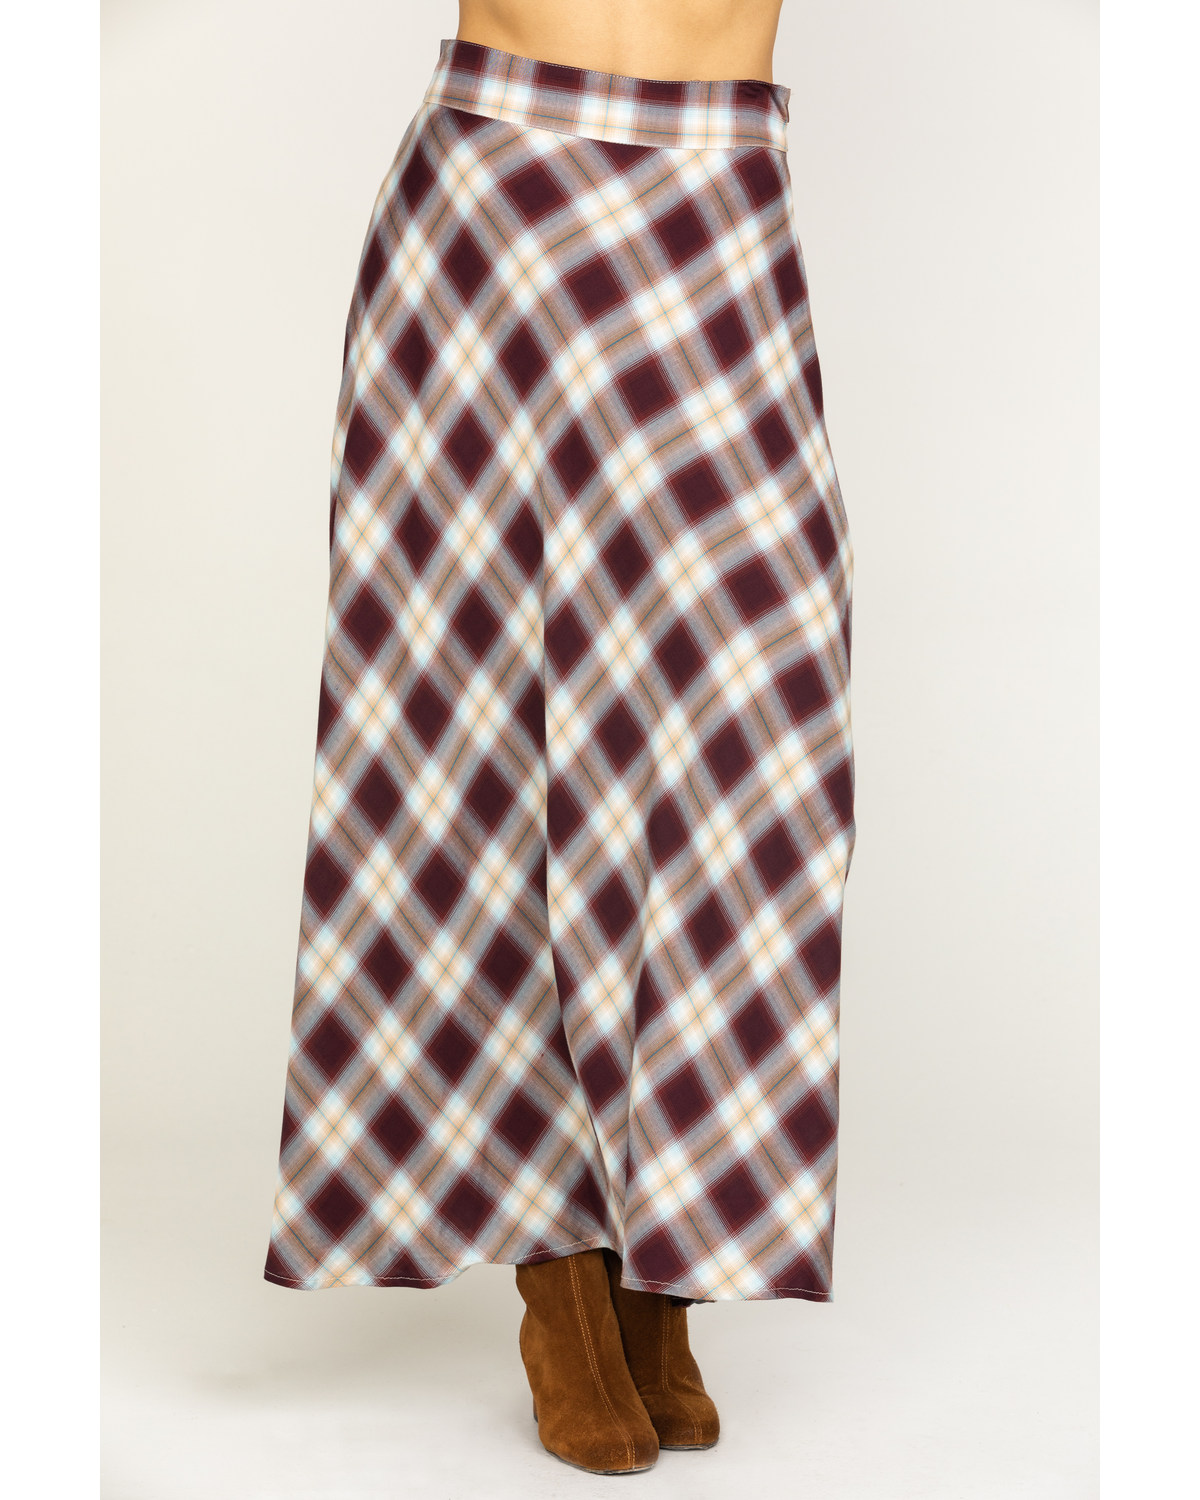 Stetson Women's Plaid Print Maxi Skirt